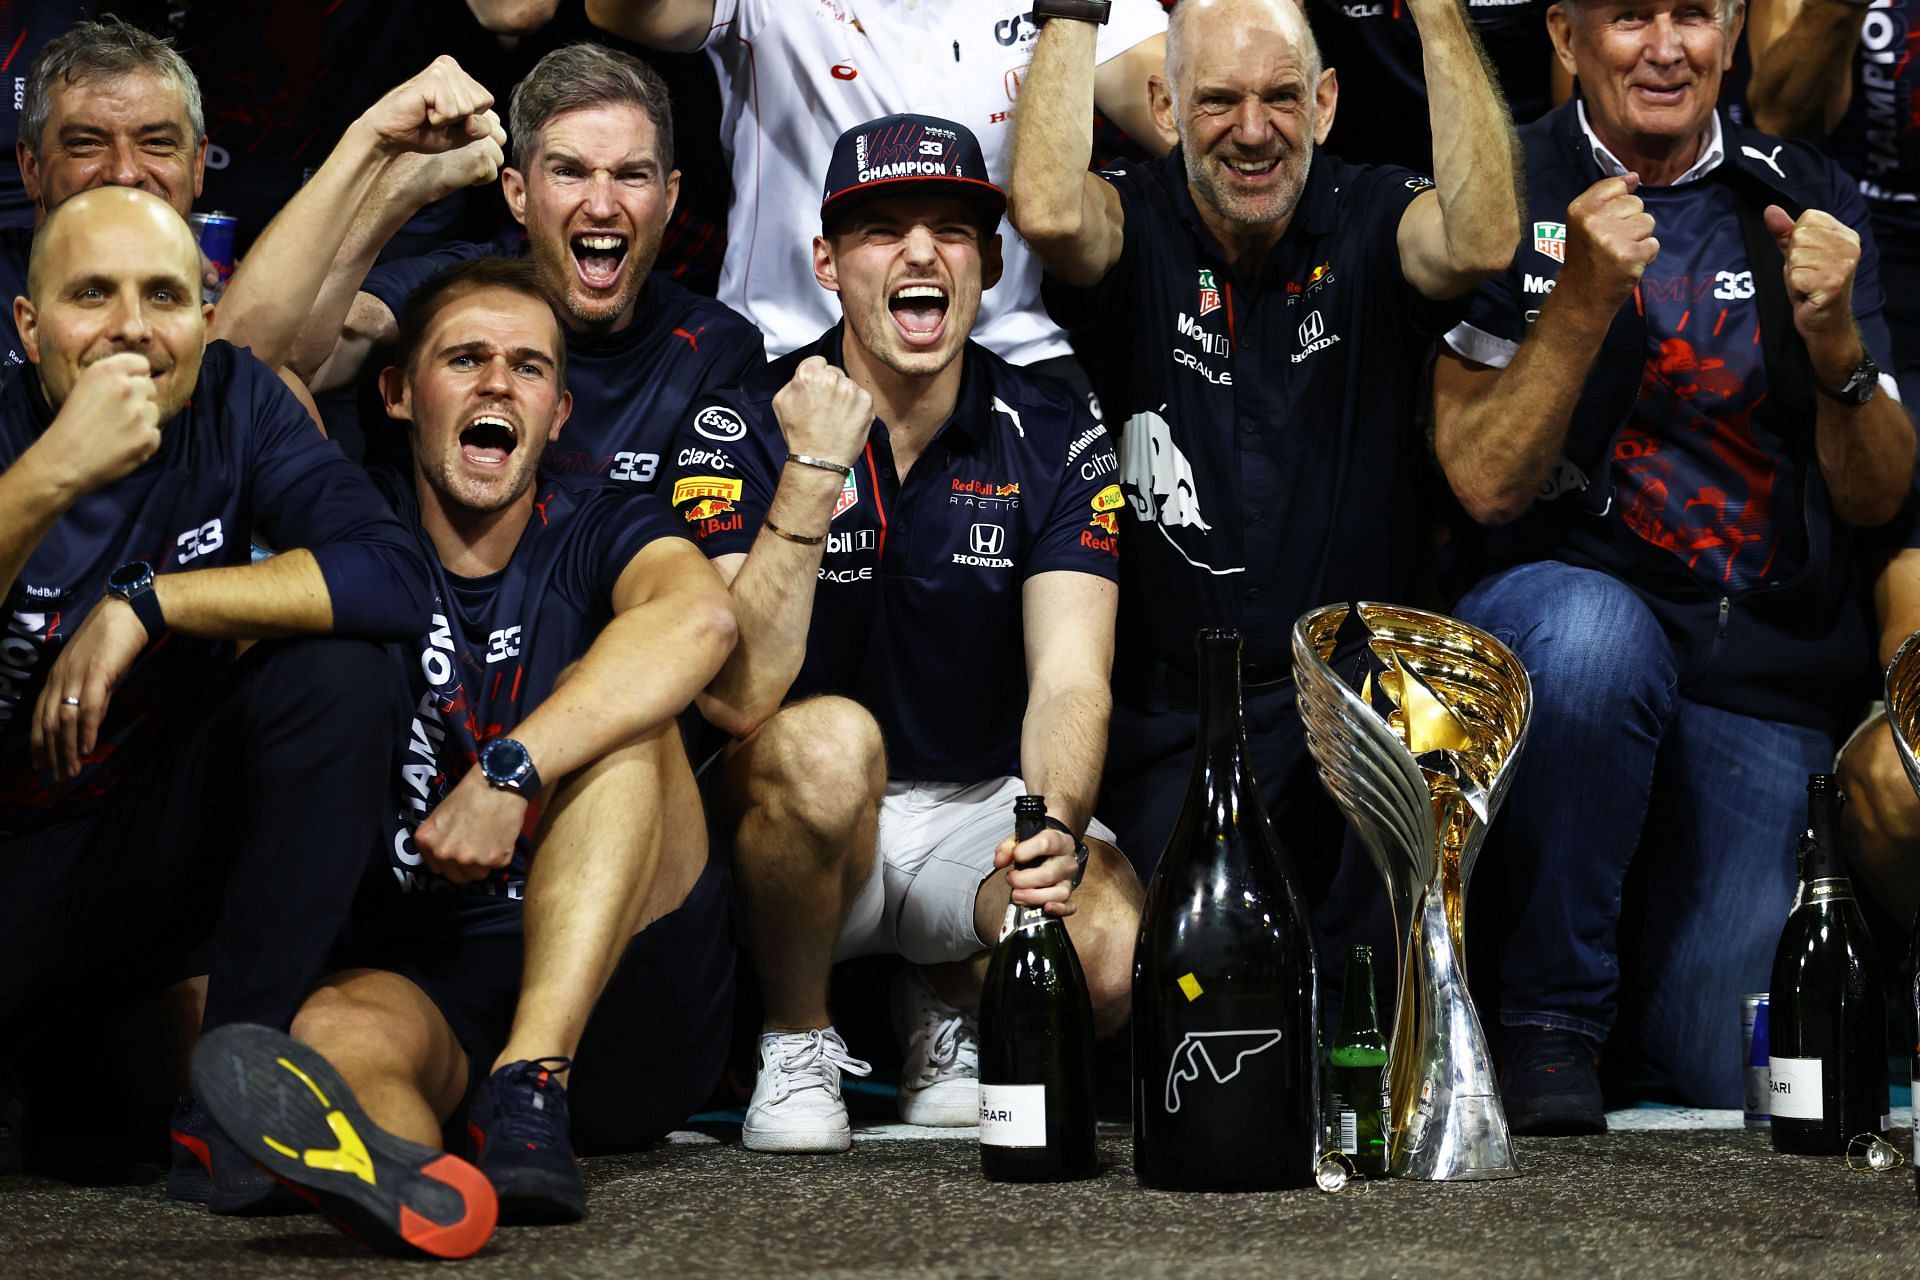 F1 Grand Prix of Abu Dhabi &mdash; Max Verstappen won the championship in the last round at Abu Dhabi